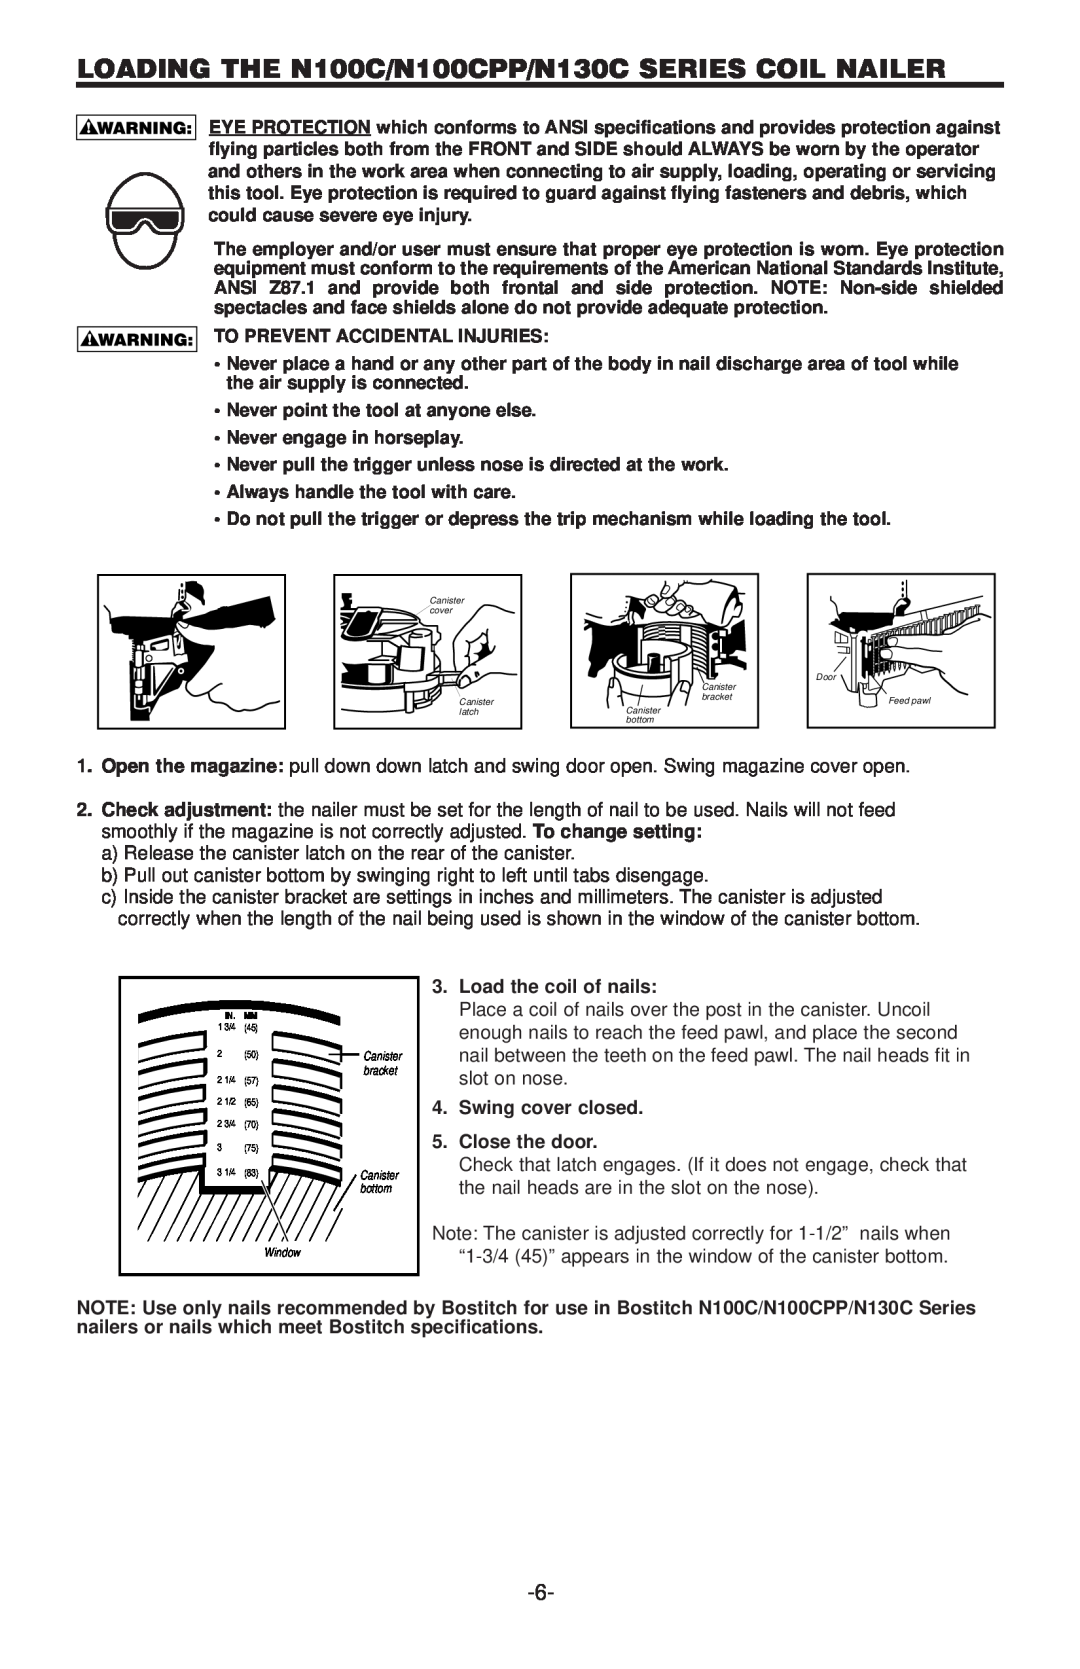 Bostitch manual LOADING THE N100C/N100CPP/N130C SERIES COIL NAILER 